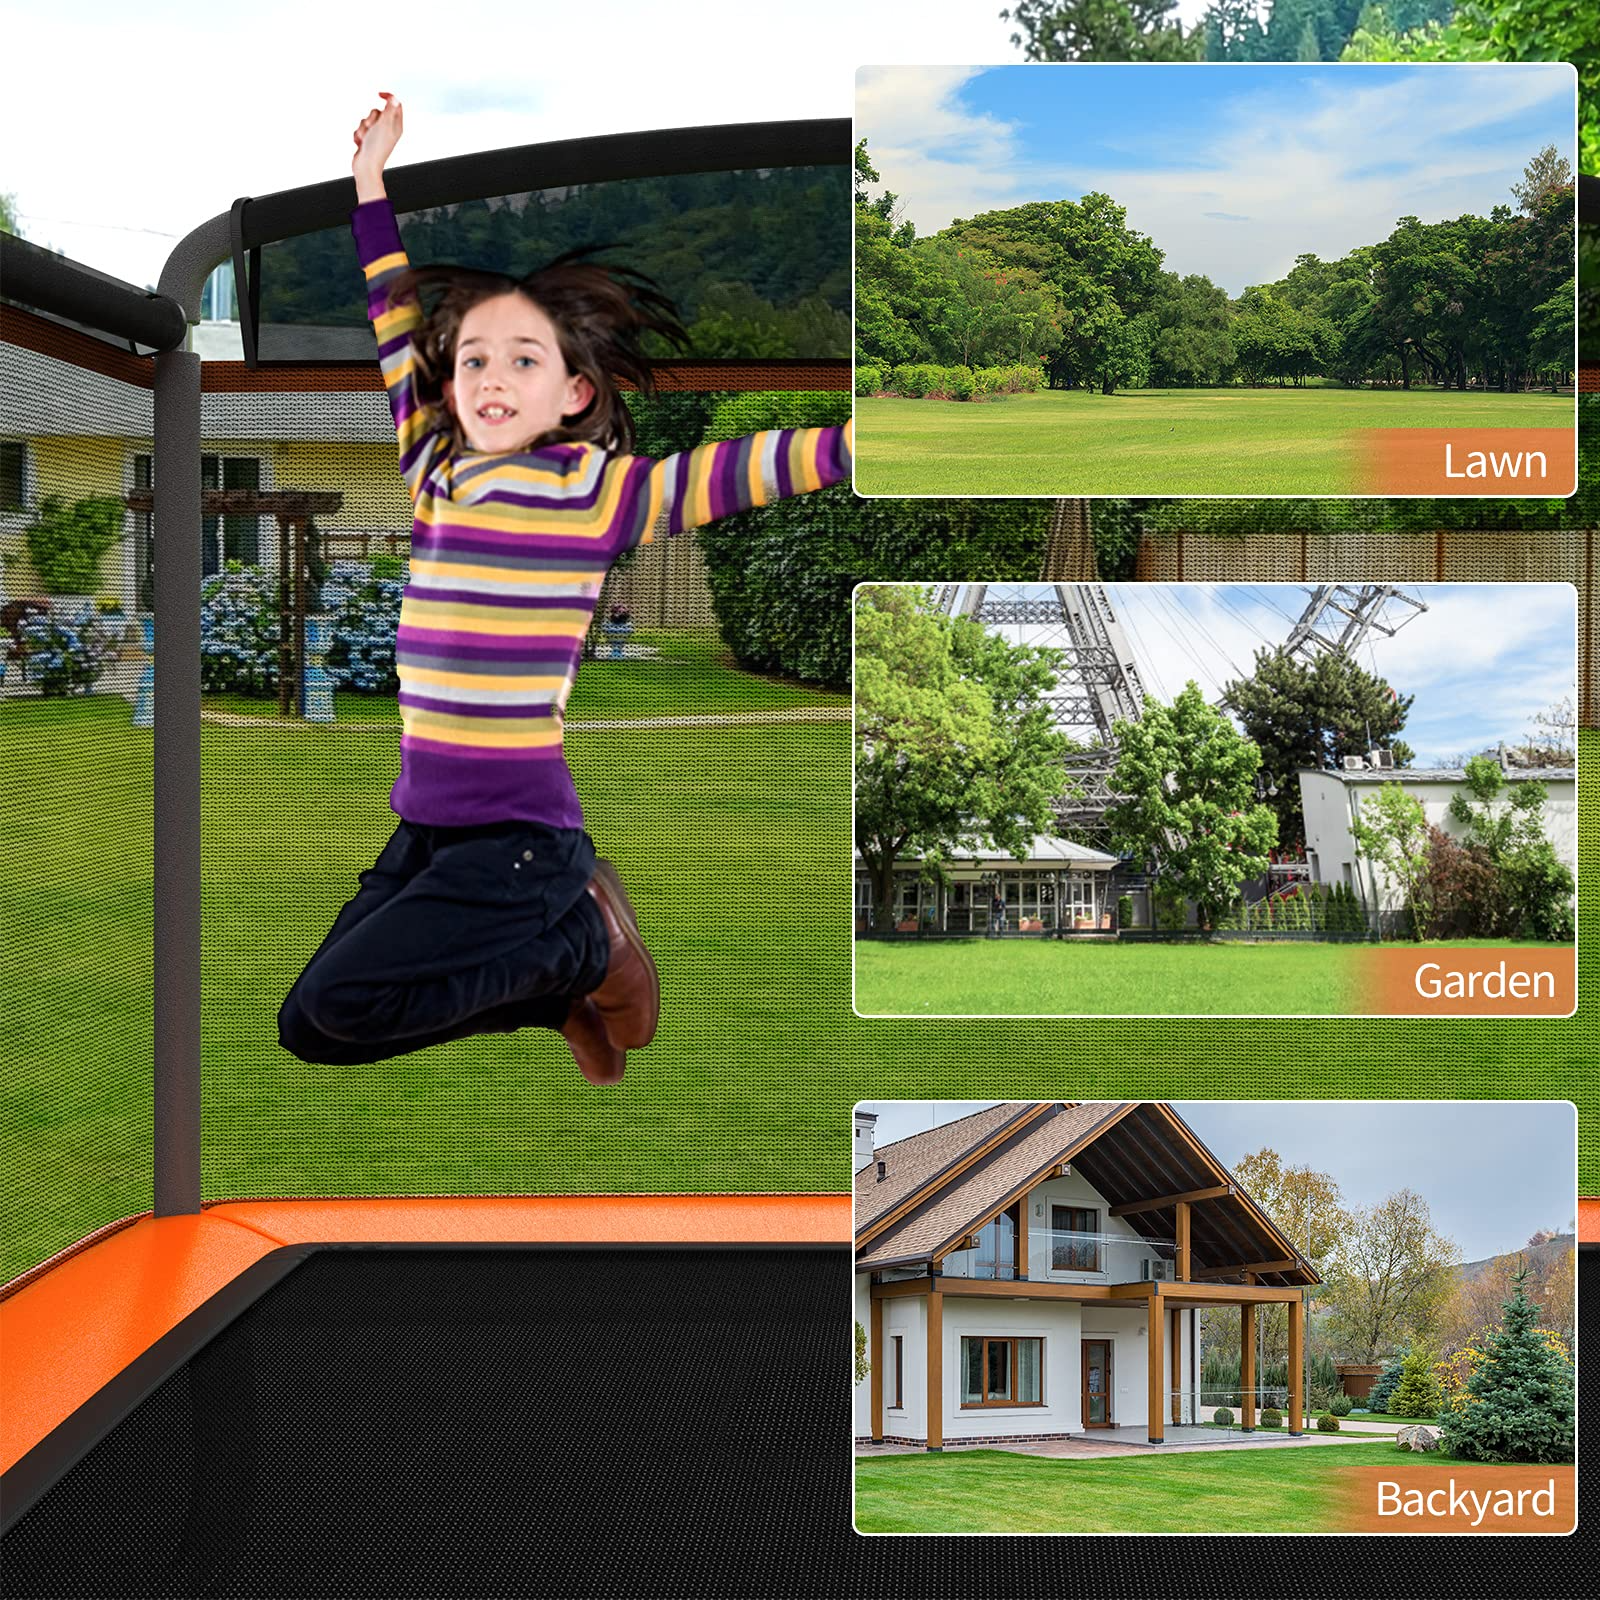 Giantex 6 Ft Kids Trampoline with Swing, Baby Toddler Rectangle Trampoline, Max Load 220lbs (Blue/Orange) - Giantexus